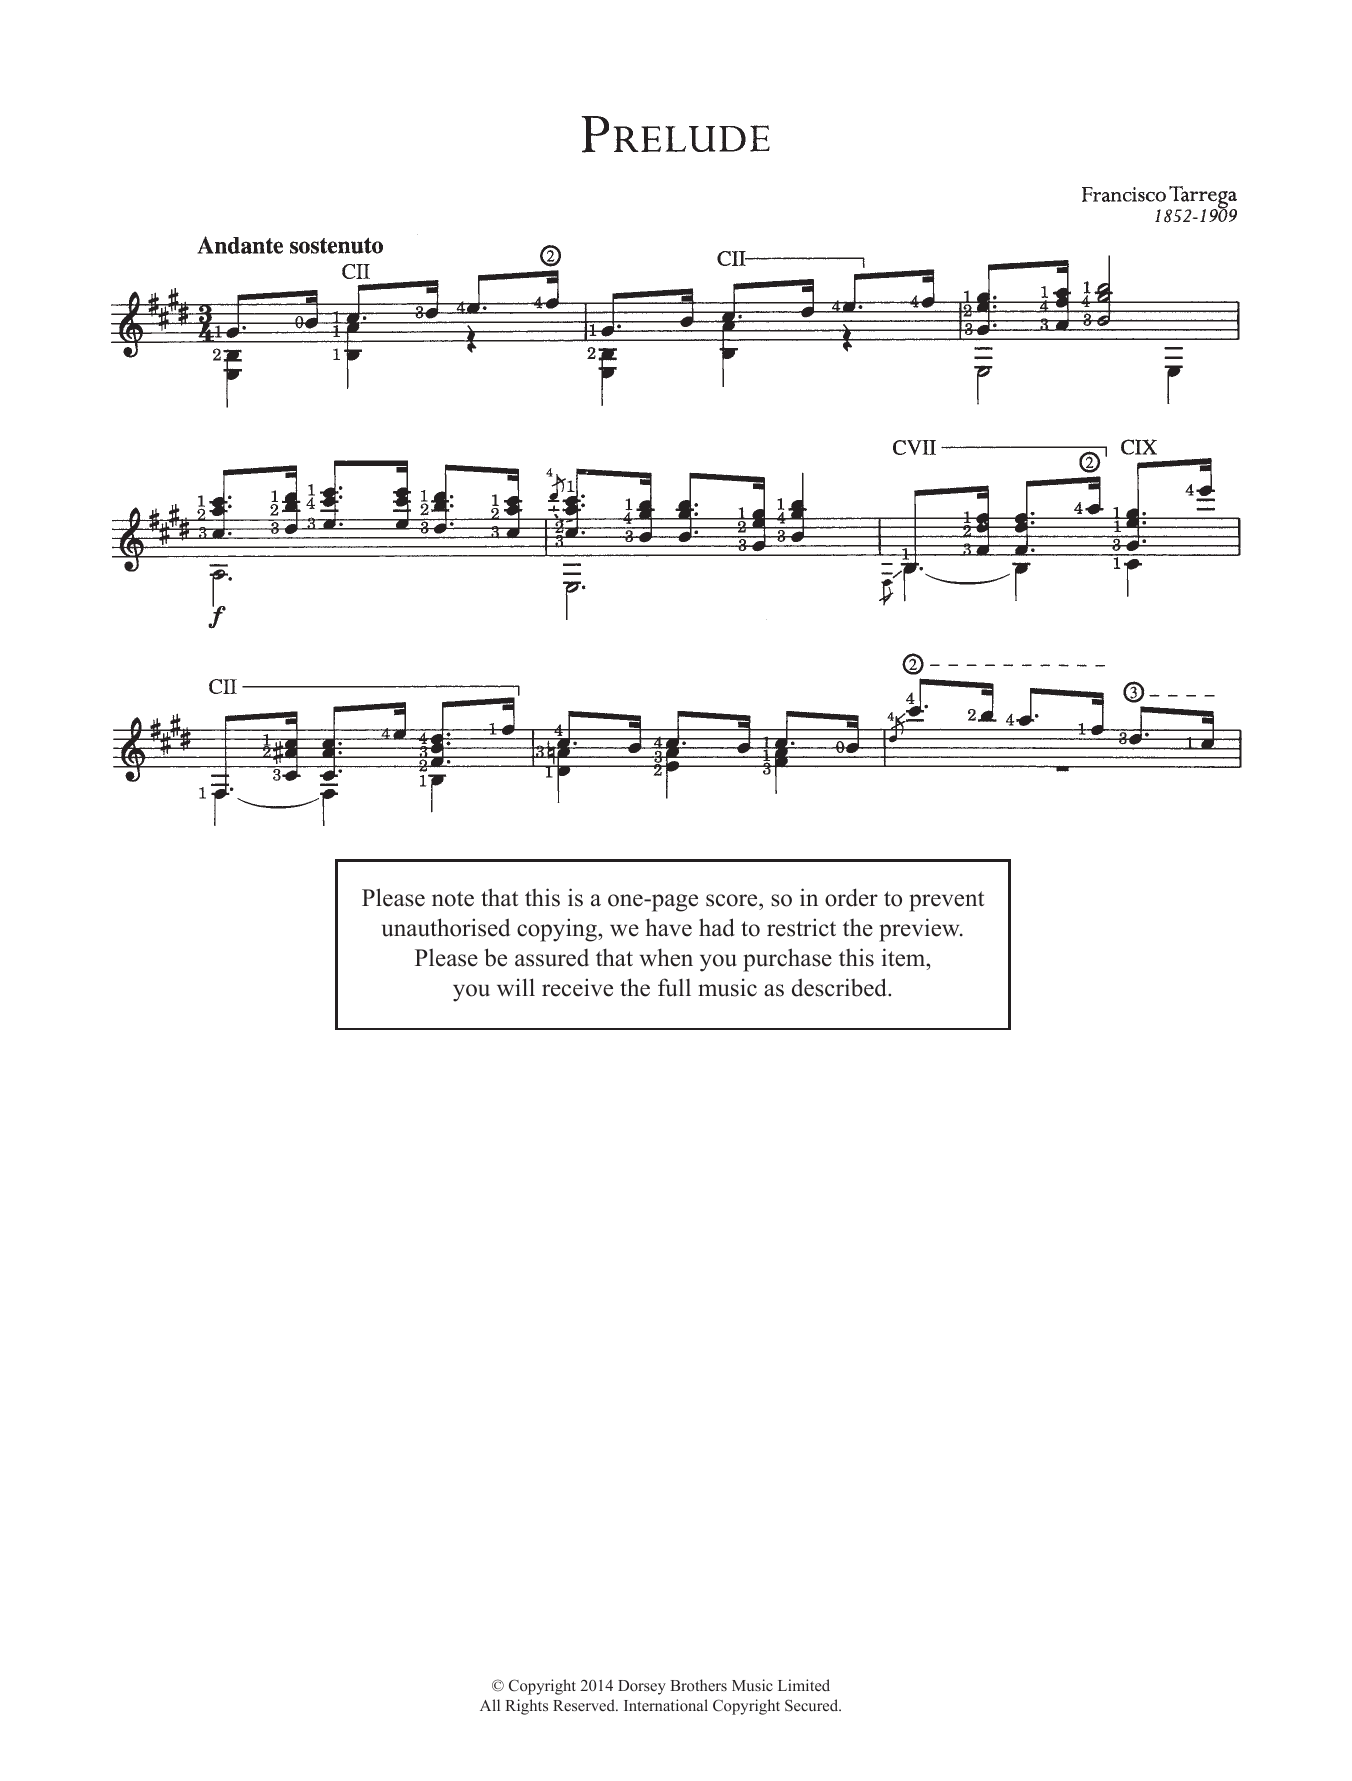 Francisco Tárrega Prelude Sheet Music Notes & Chords for Guitar - Download or Print PDF